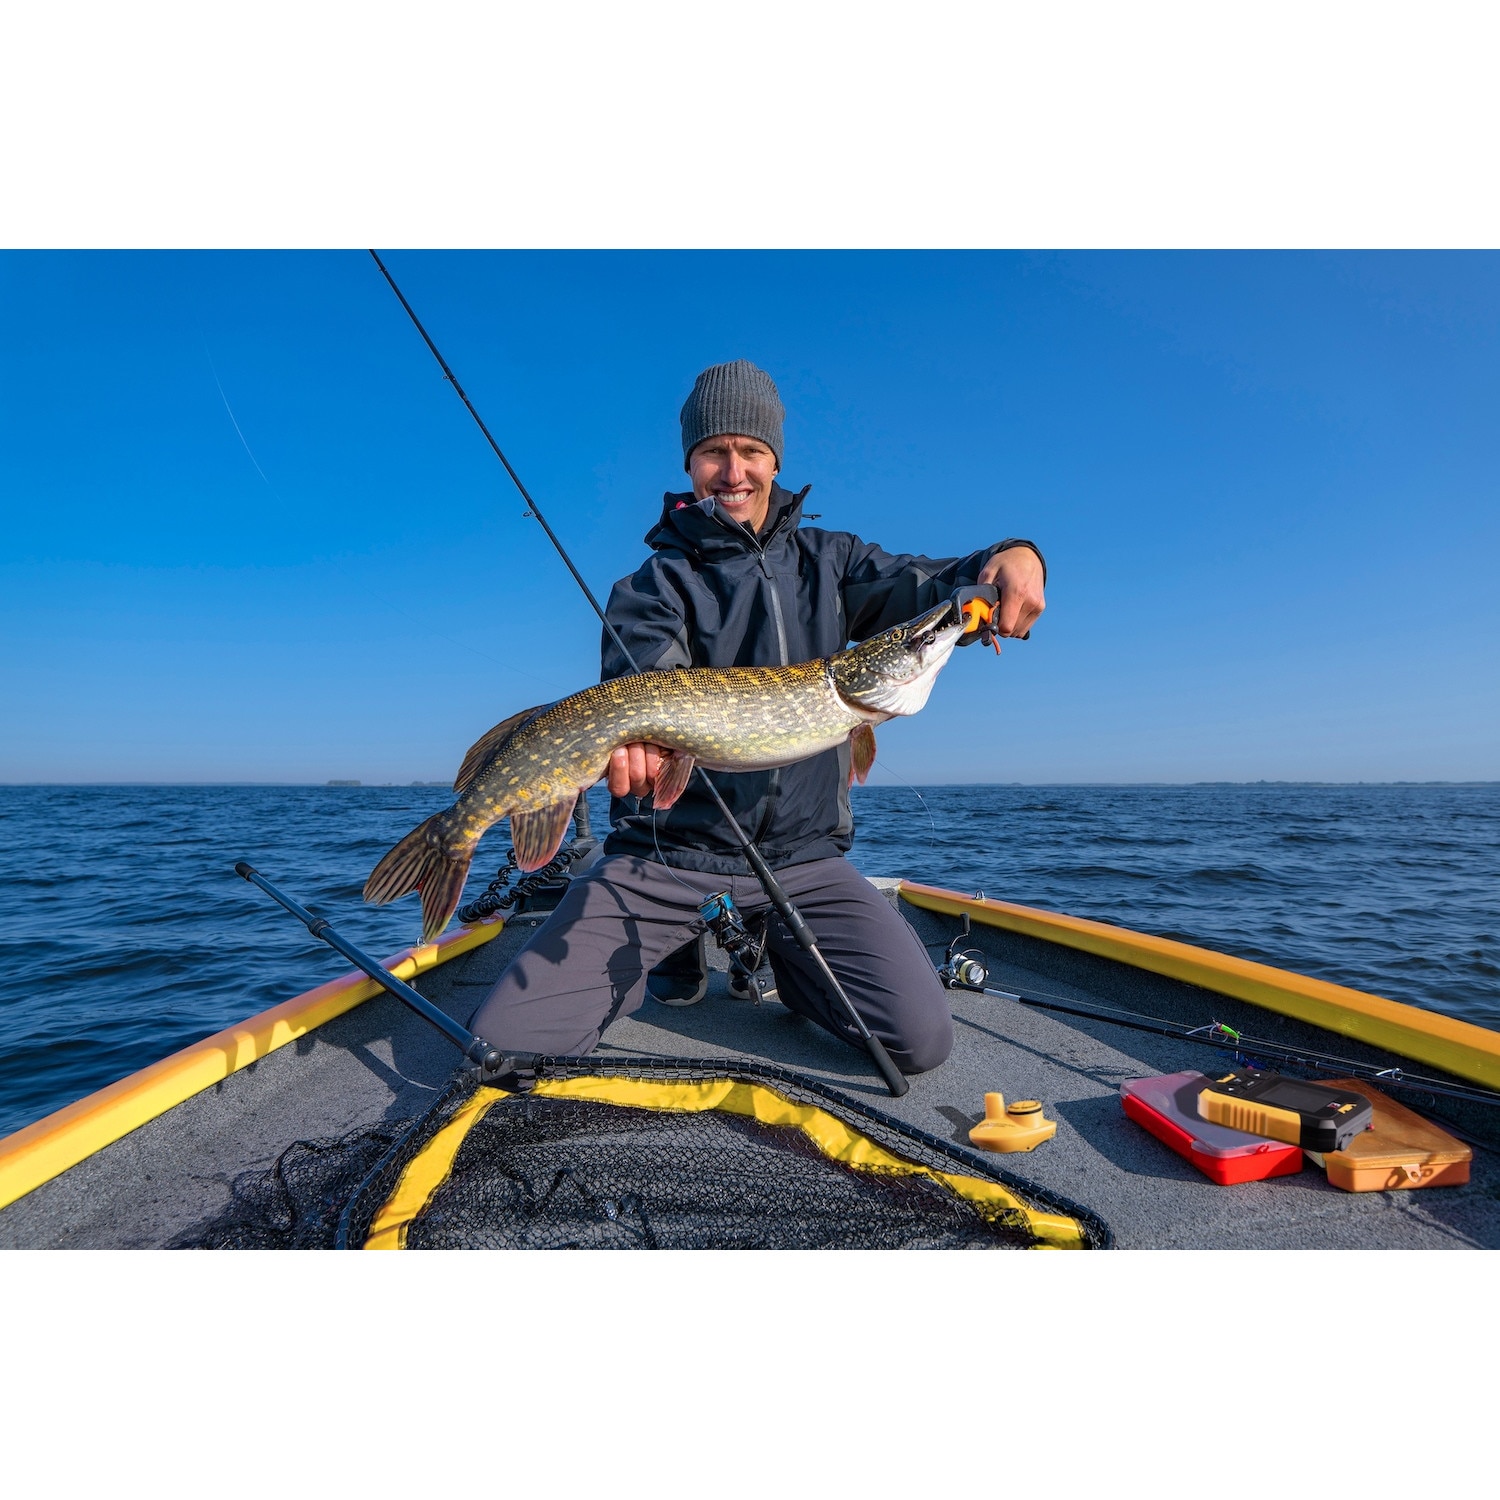 Sonar de detectare a pestilor, Fishing Expedition FishVision Pro